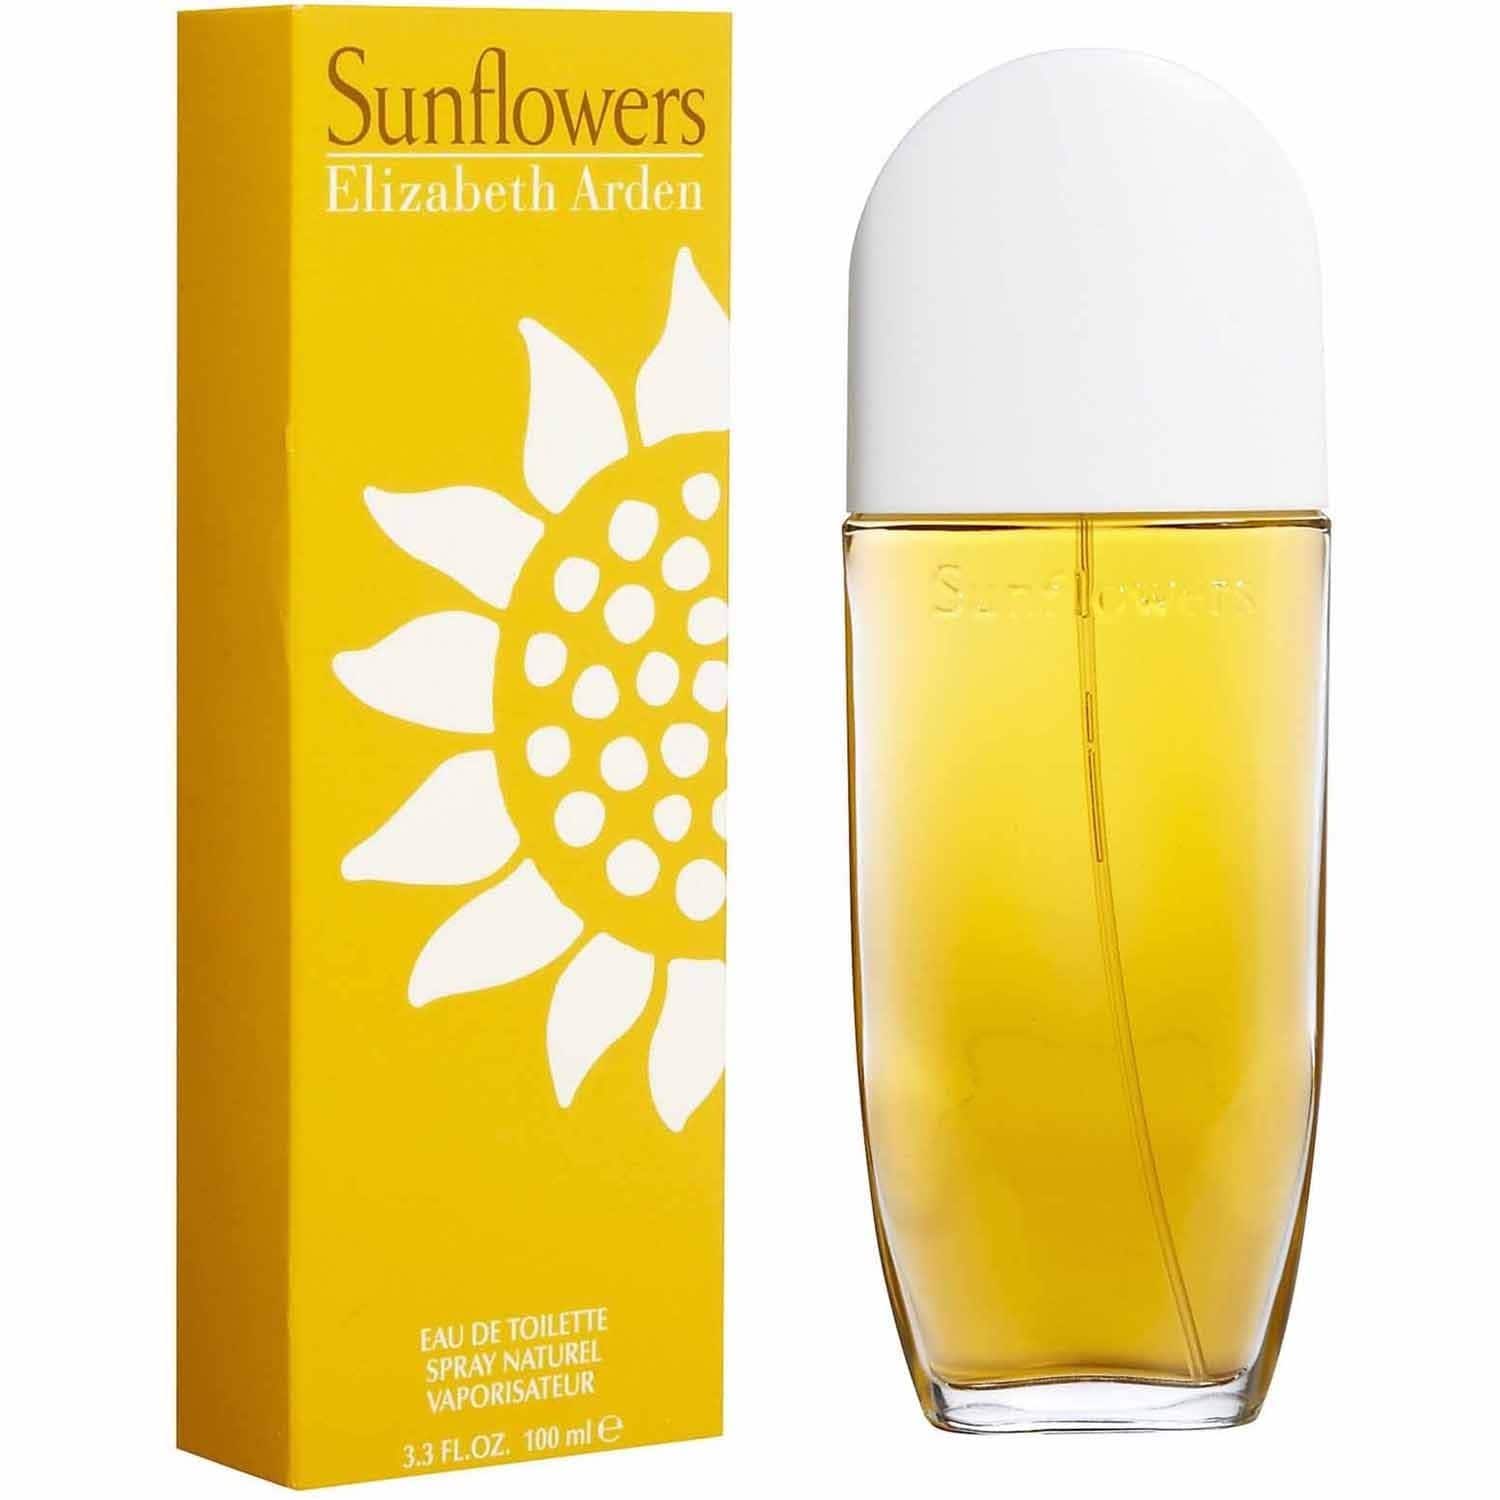 Elizabeth Arden Sunflowers Eau de toilette Perfume For Women 3.3 oz ...